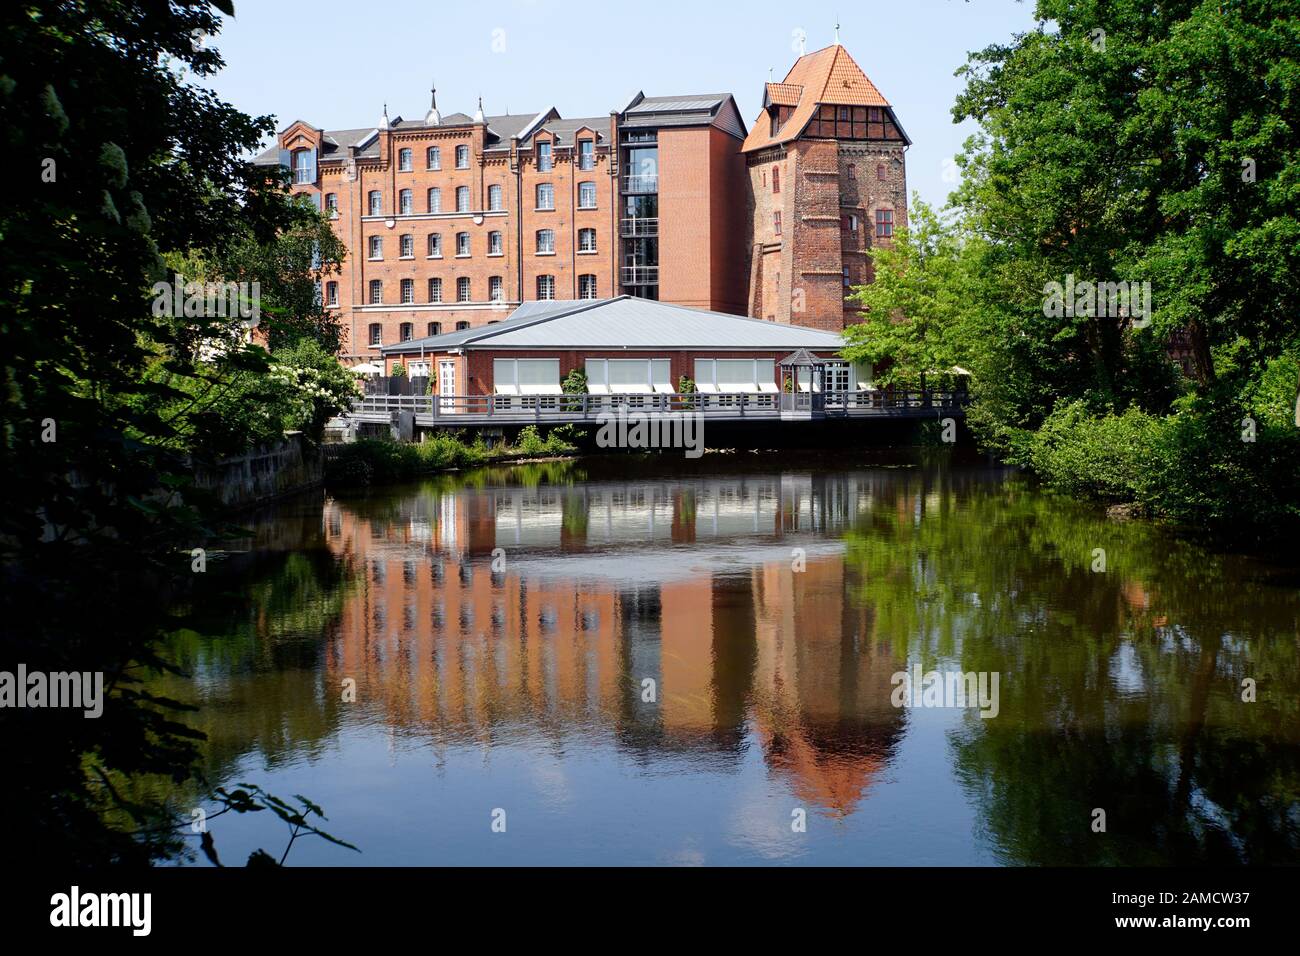 Historische Altstadt Lüneburg - Moderner Bau in altem Stil, Niedersachsen, Allemagne Banque D'Images